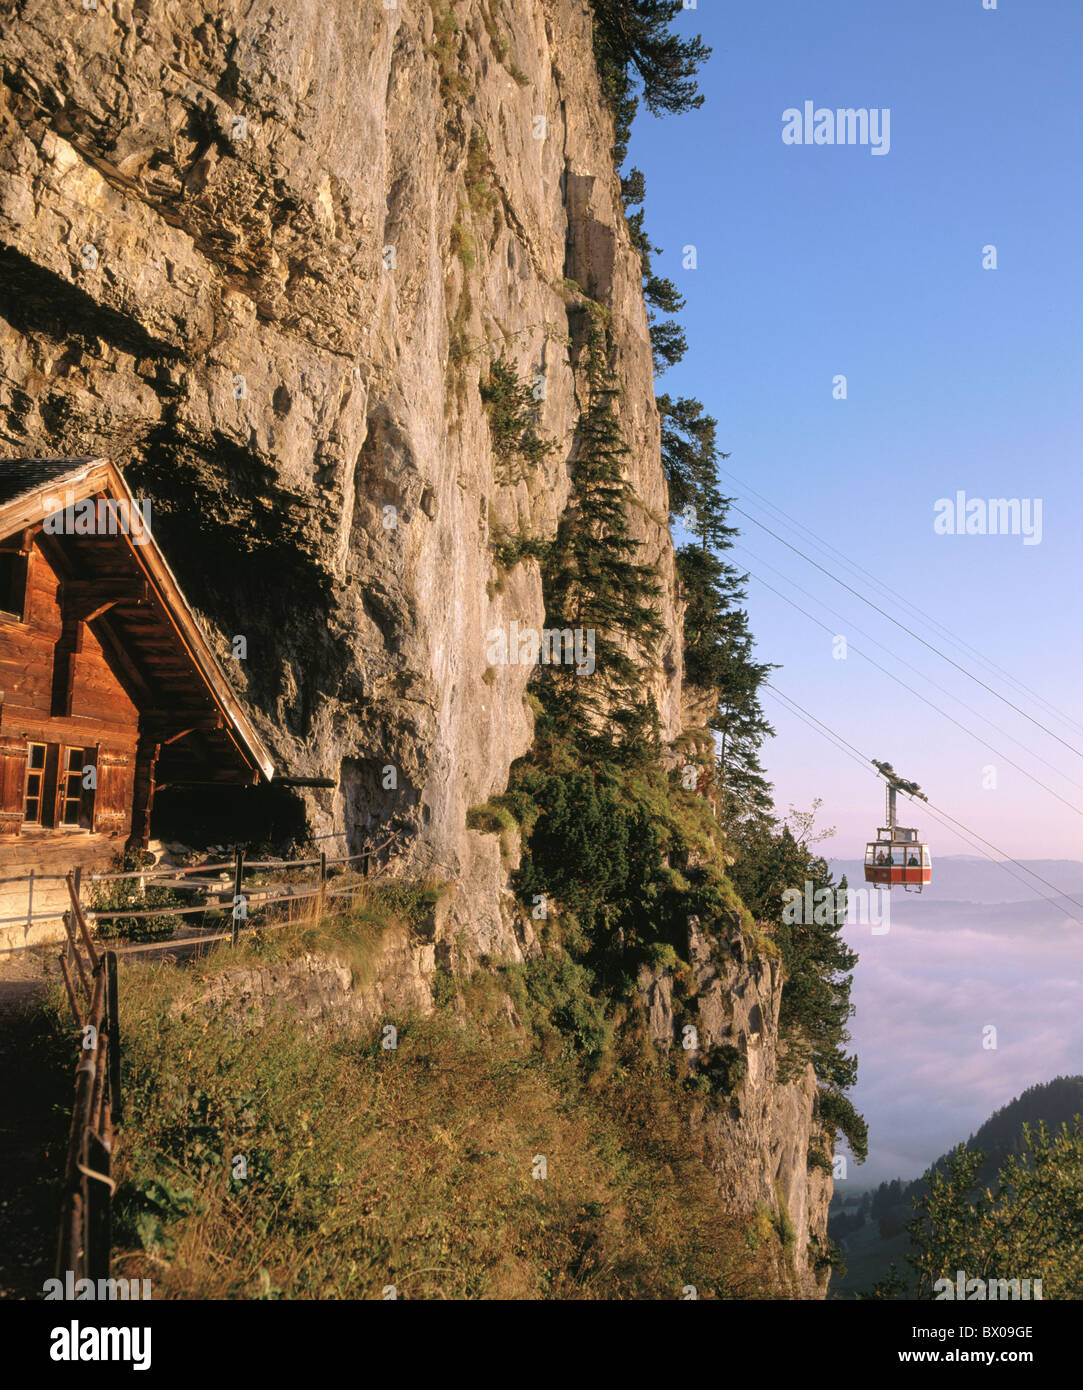 evening mood Appenzell Switzerland Europe railway Ebenalp road Ebenalp cliff wall gondola bubble lift cab Stock Photo